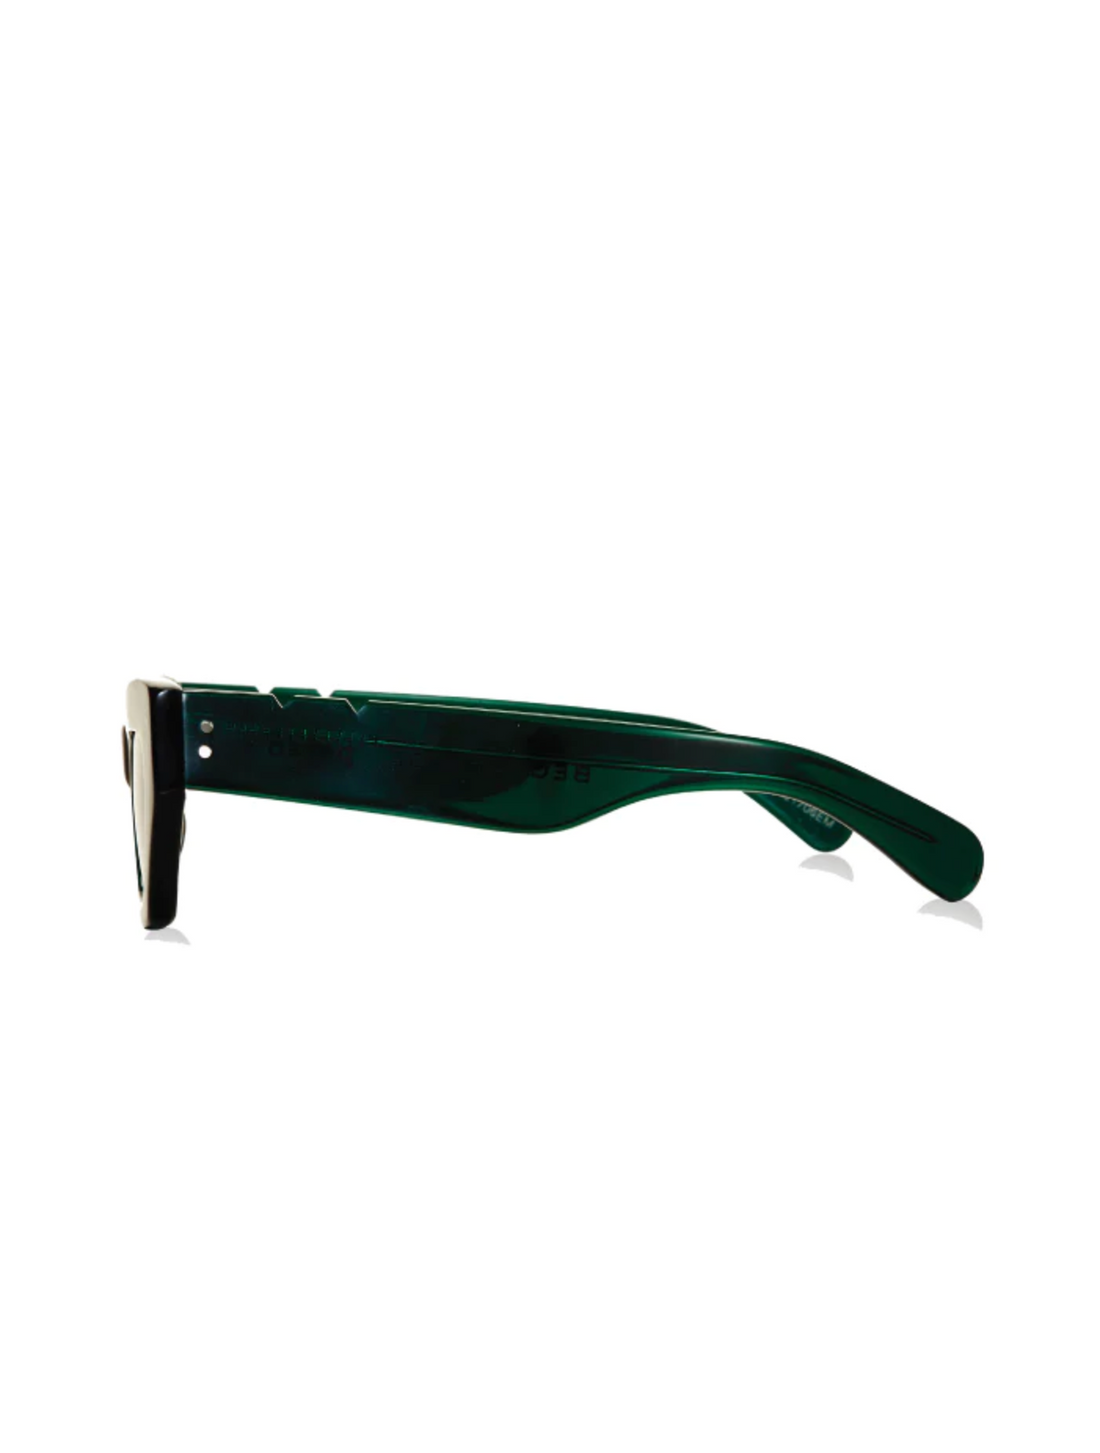 Bec & Bridge - Pared Eyewear - Emerald